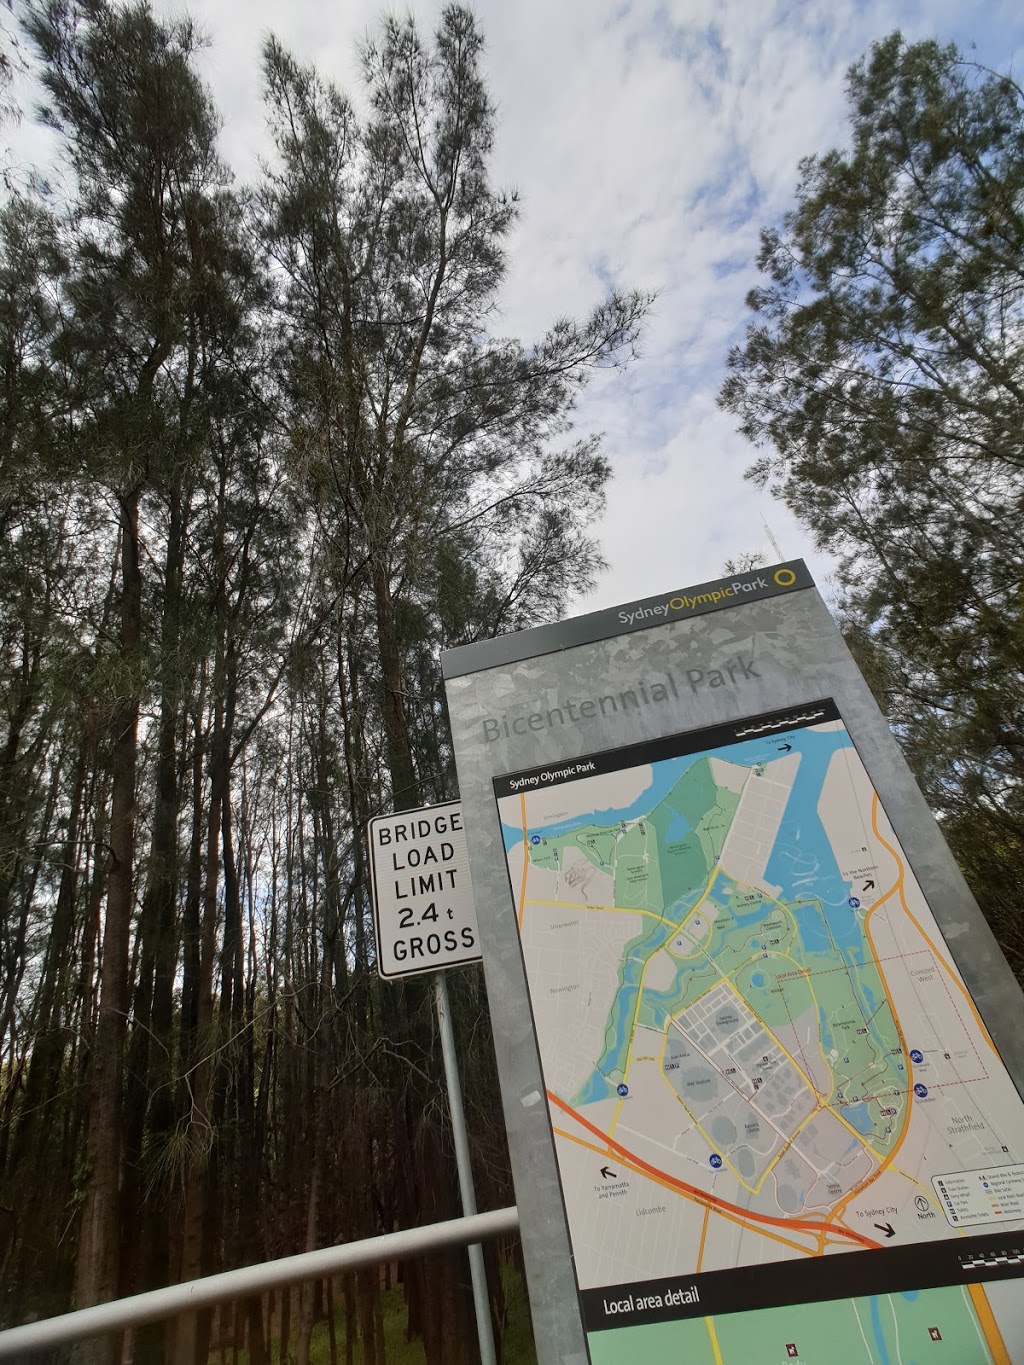 Waterbird Refuge | park | Sydney Olympic Park NSW 2127, Australia